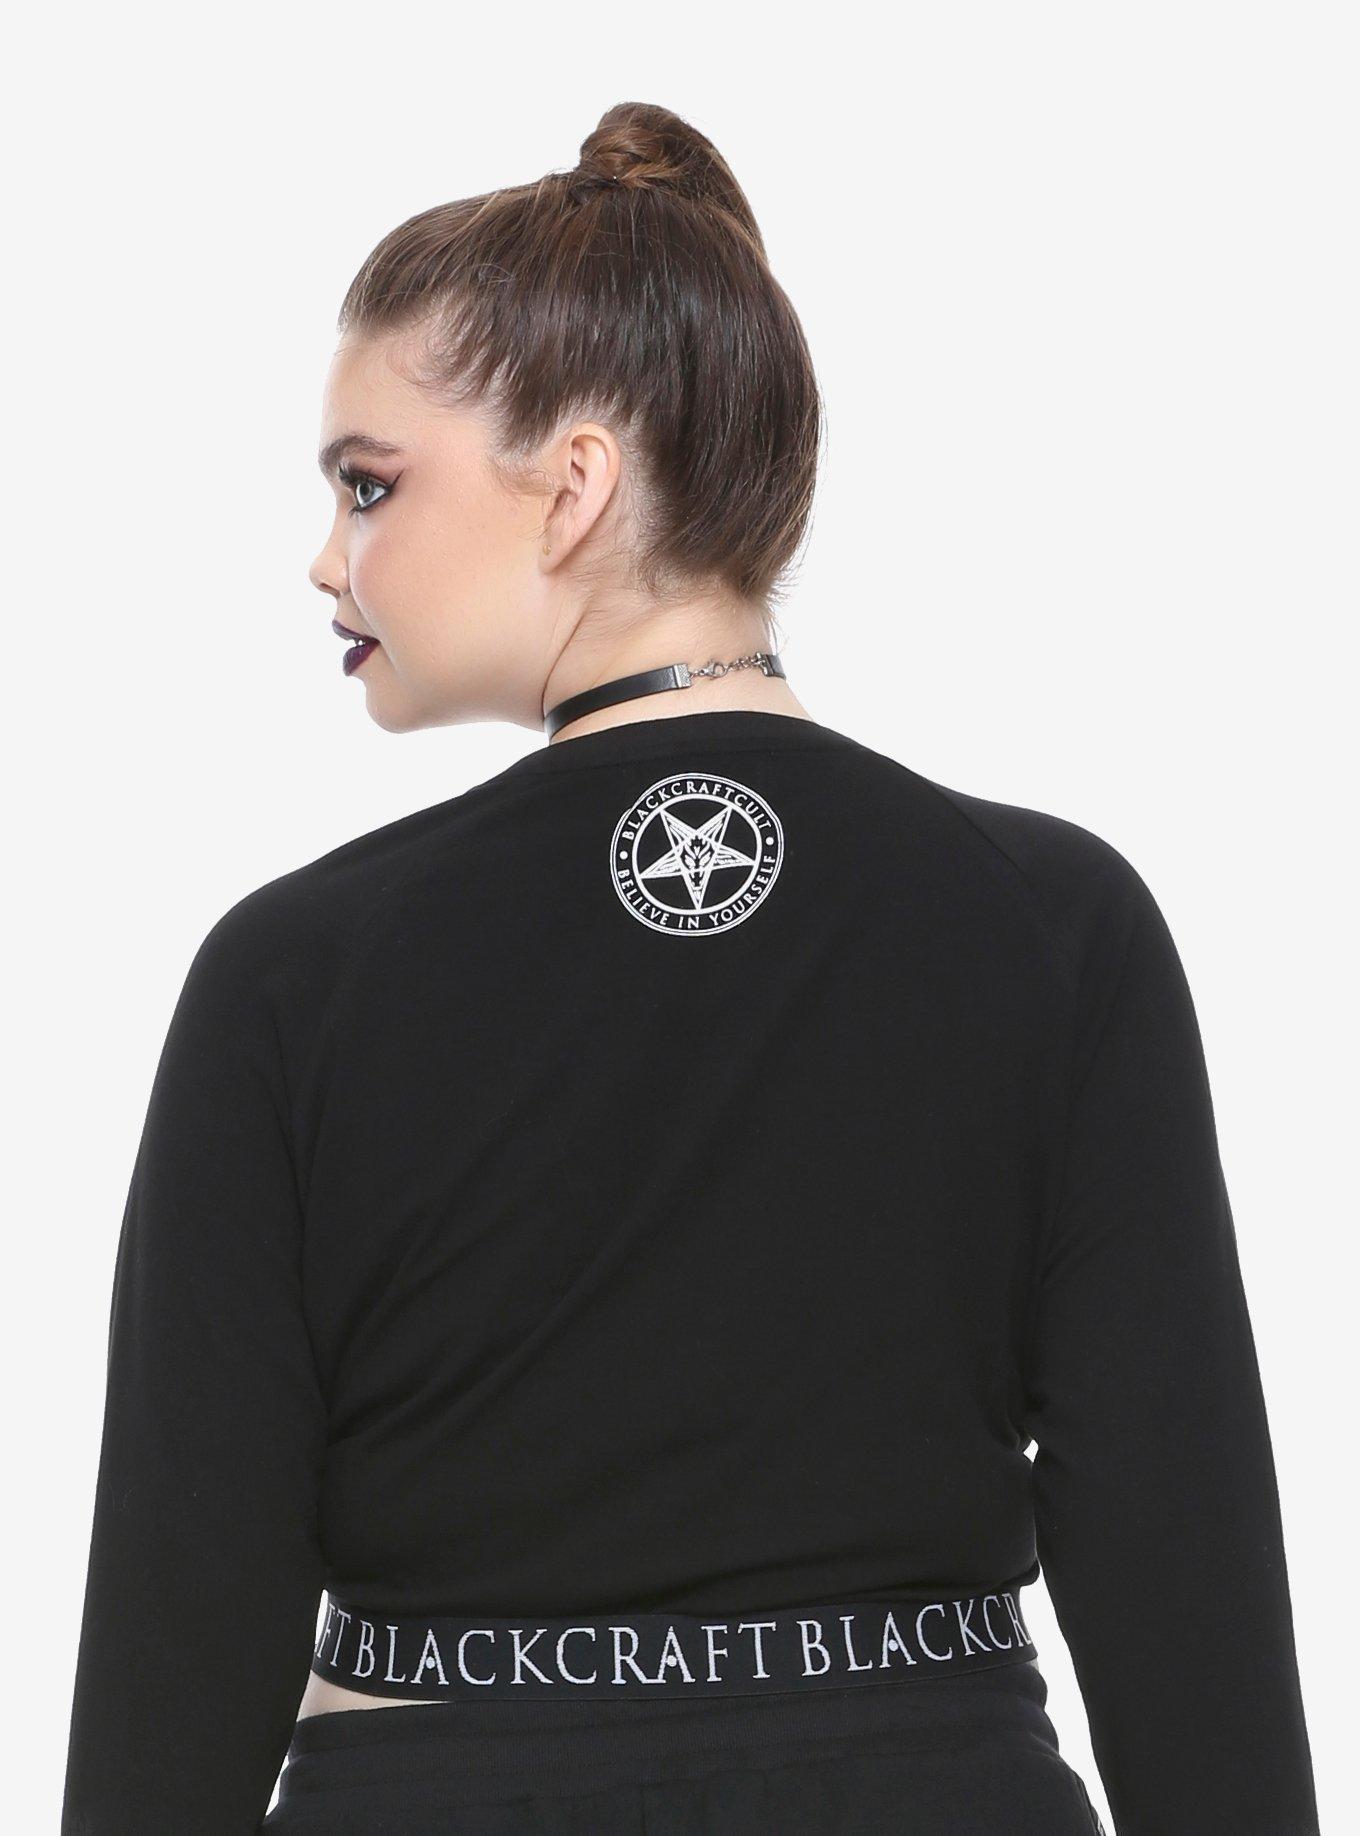 BlackCraft Baphomet Long-Sleeve Girls T-Shirt Plus Size Hot Topic Exclusive, BLACK, alternate